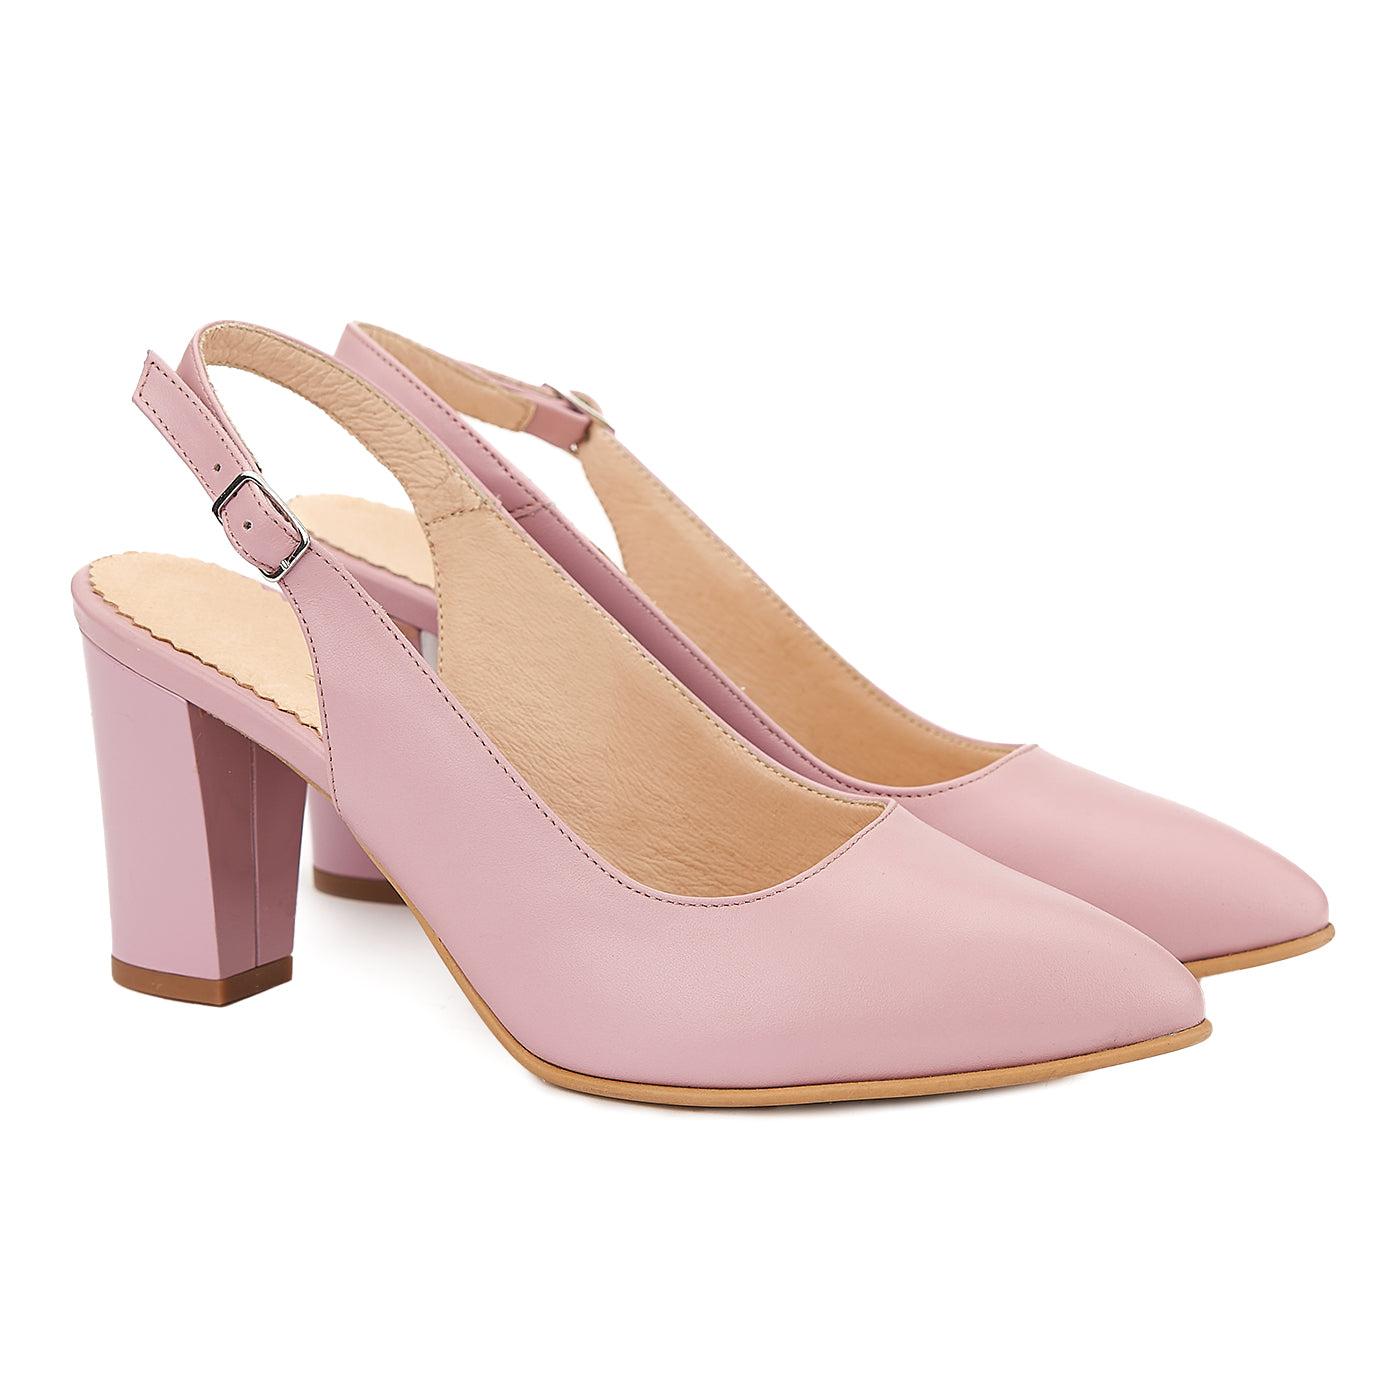 Sandale elegante din piele naturala roz pudra 5033